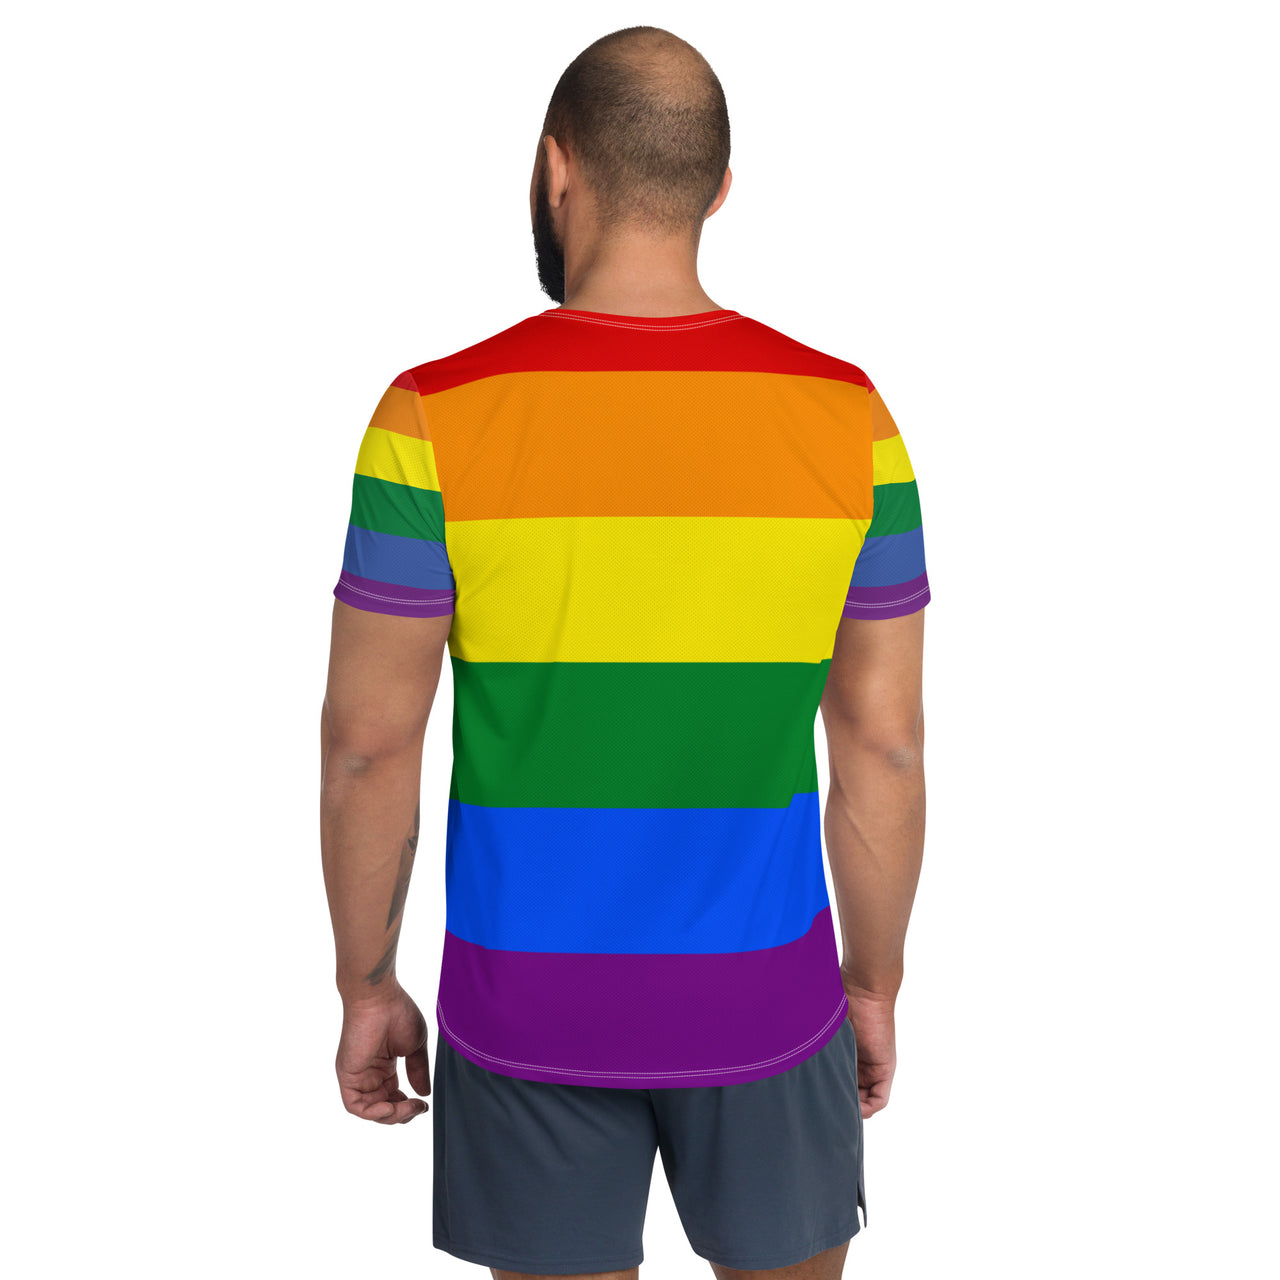 Rainbow Pride Flag LGBTQ T- Shirt Men's Size SHAVA